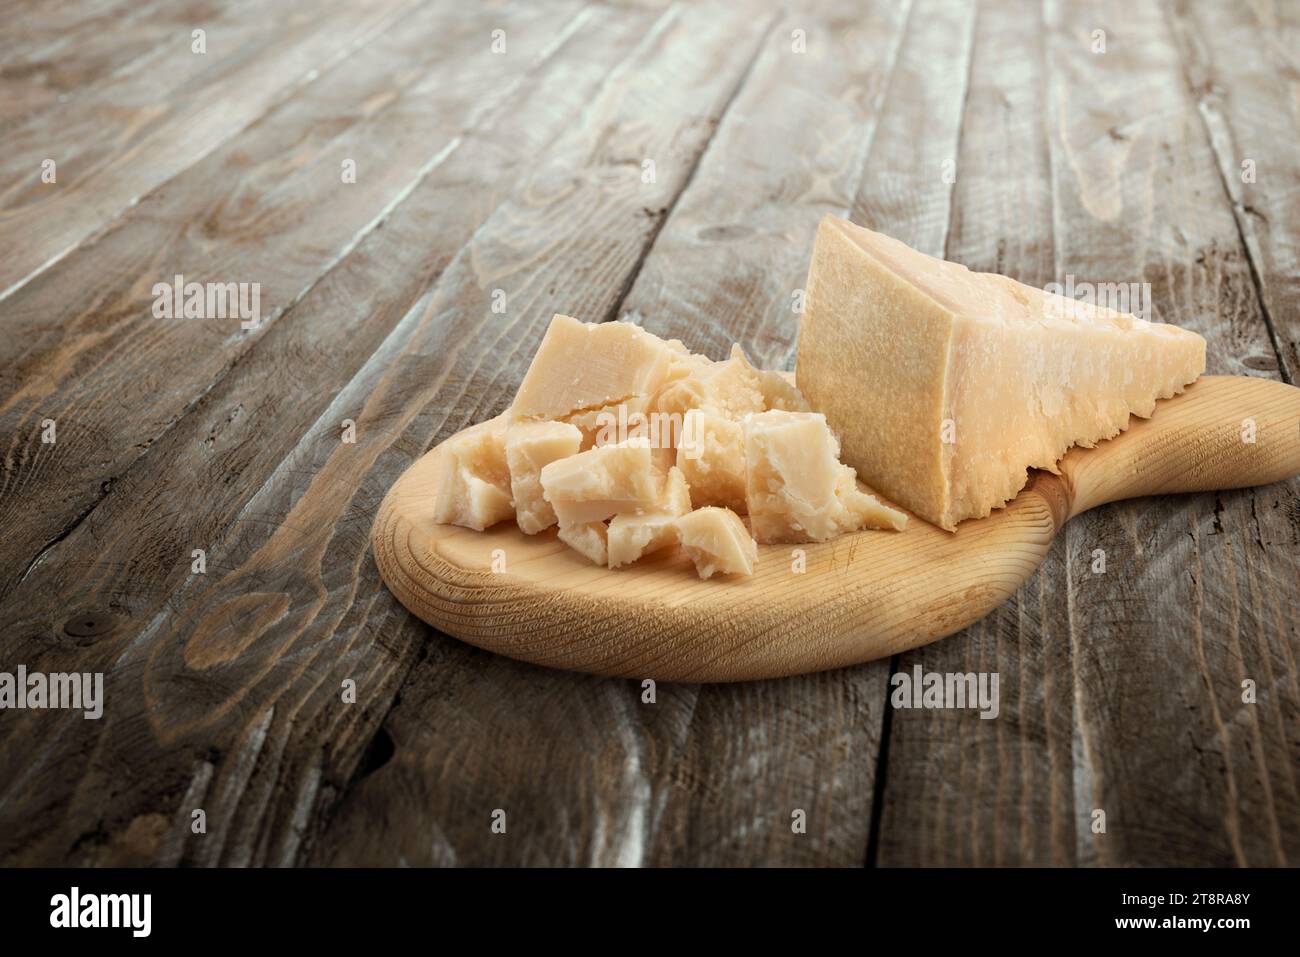 Parmesan cheese blocks on wooden board. Stock Photo